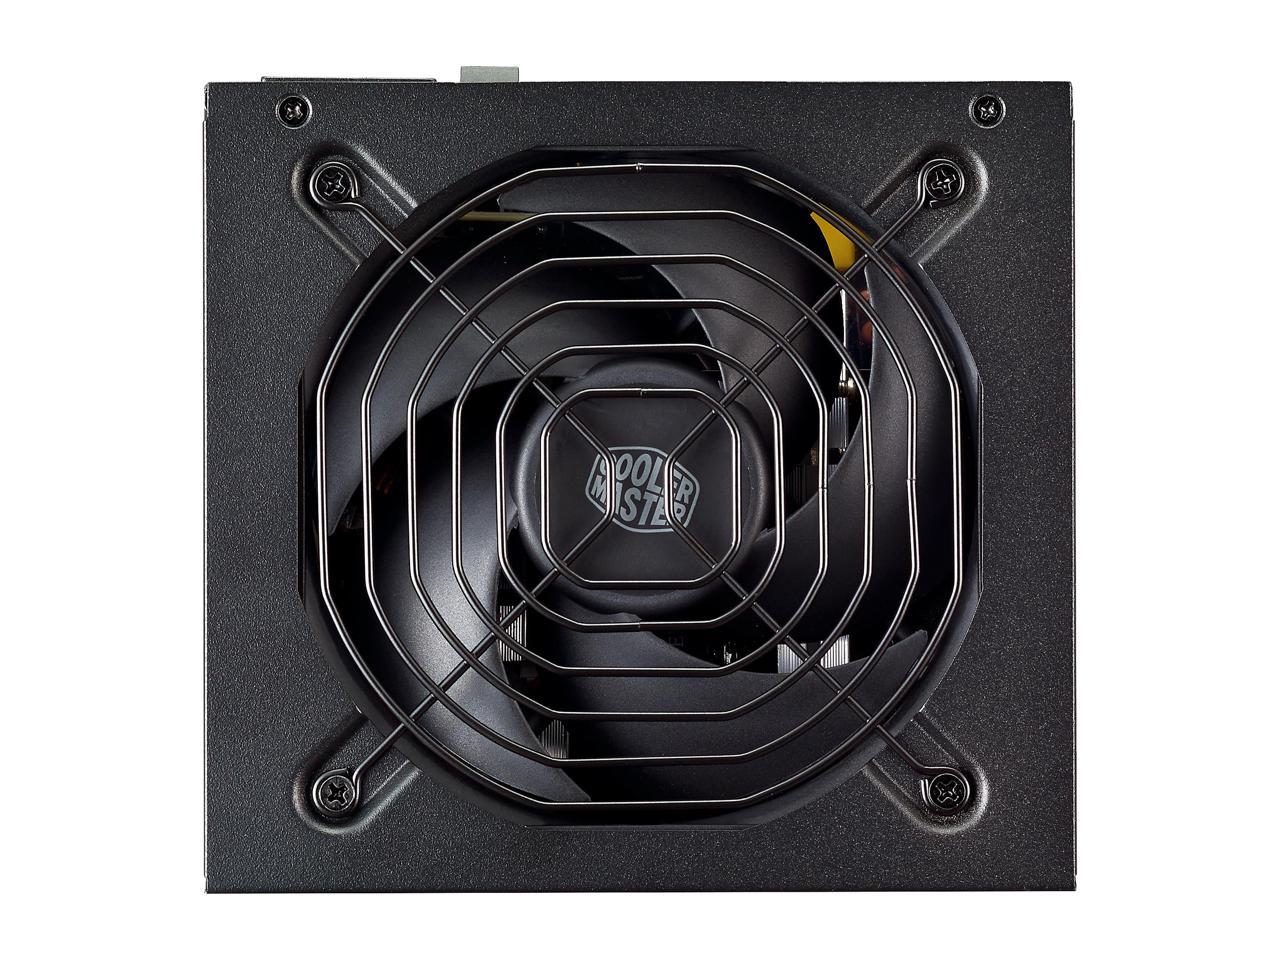 Cooler Master MWE 500 Watt Silencio Fan, Modular 80 PLUS Bronze Power Supply